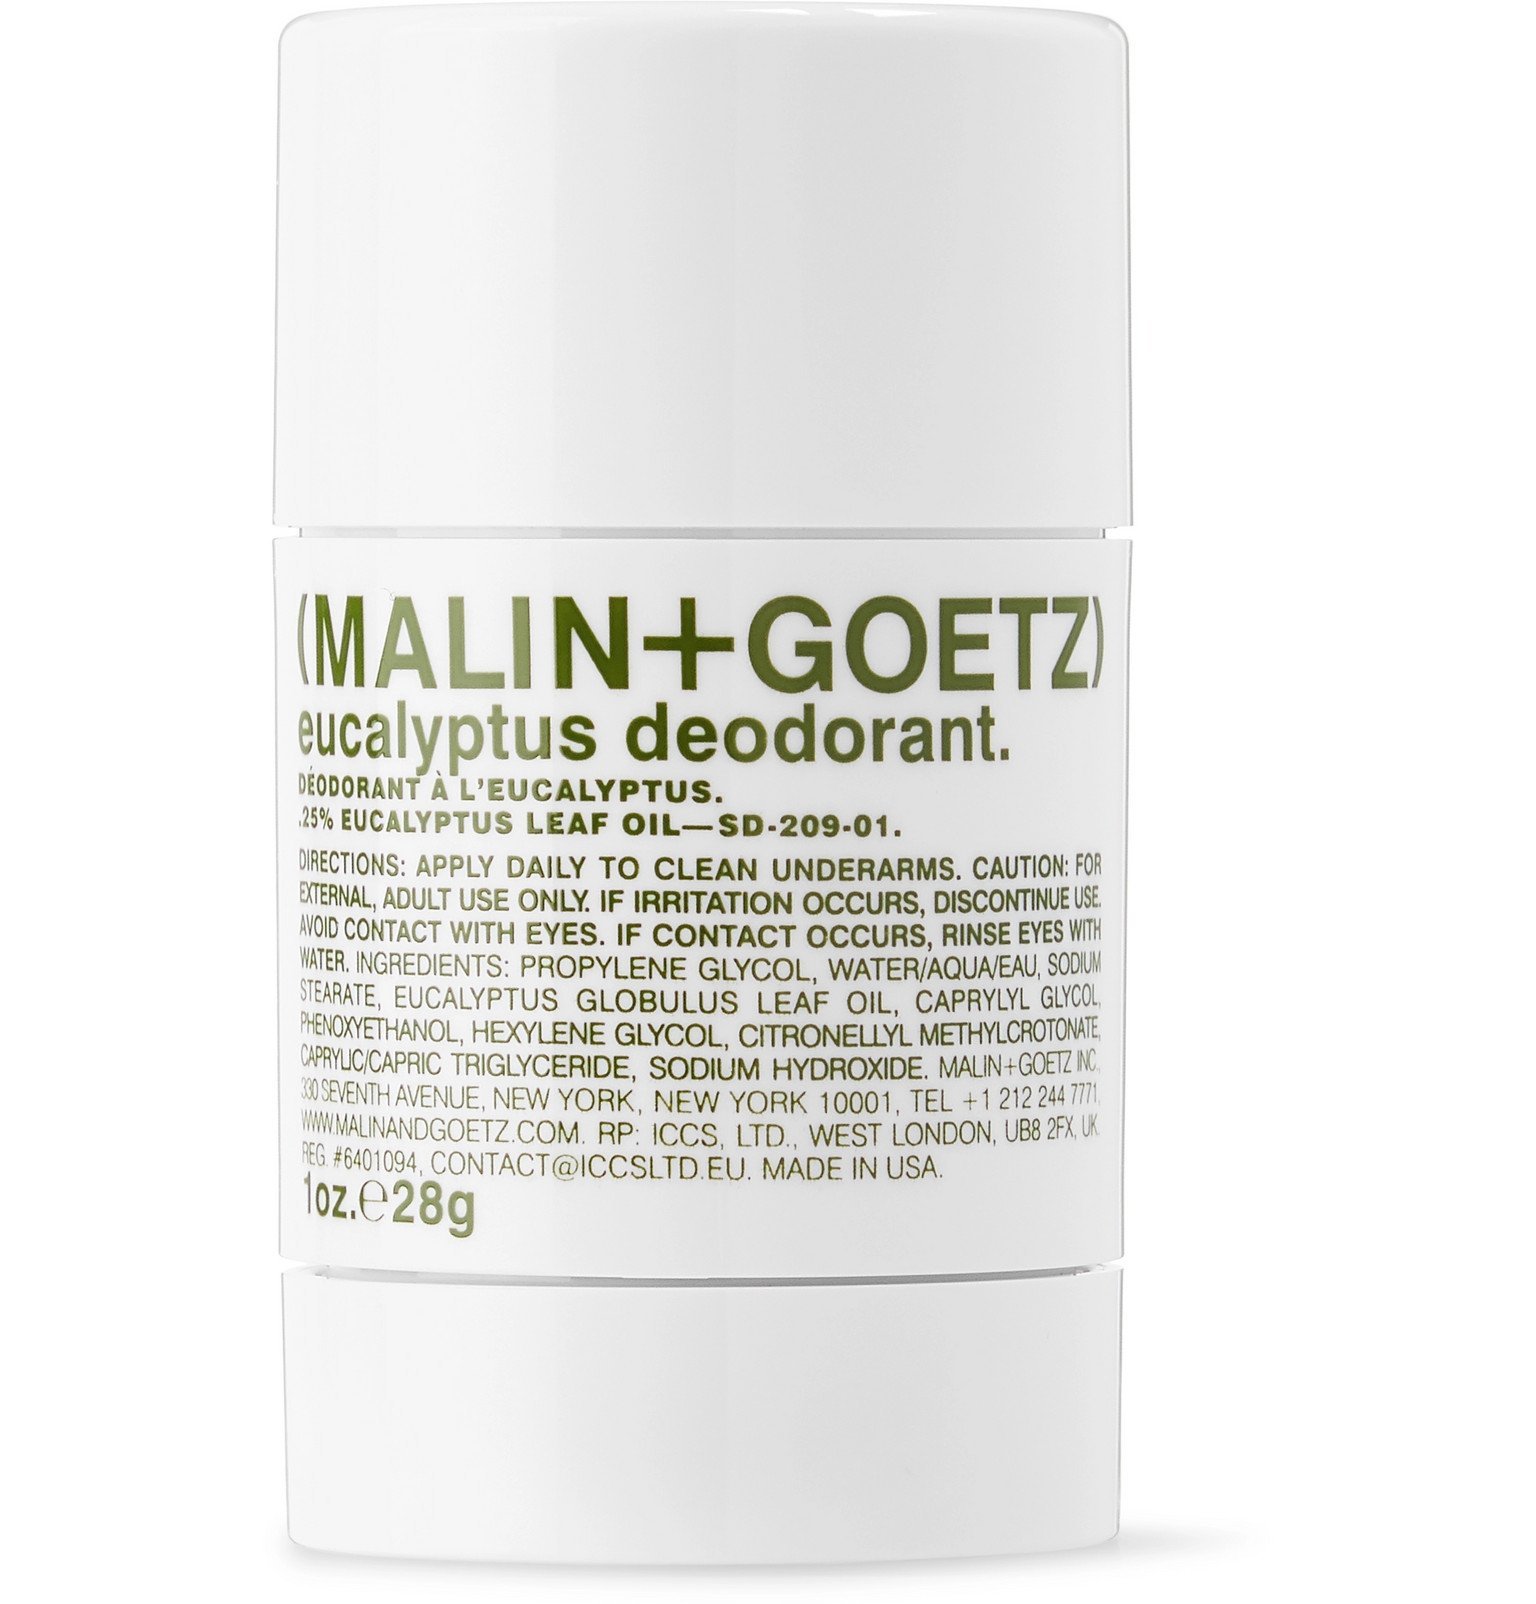 Malin Goetz - Eucalyptus Travel-Size Deodorant, 28g - Colorless Malin ...